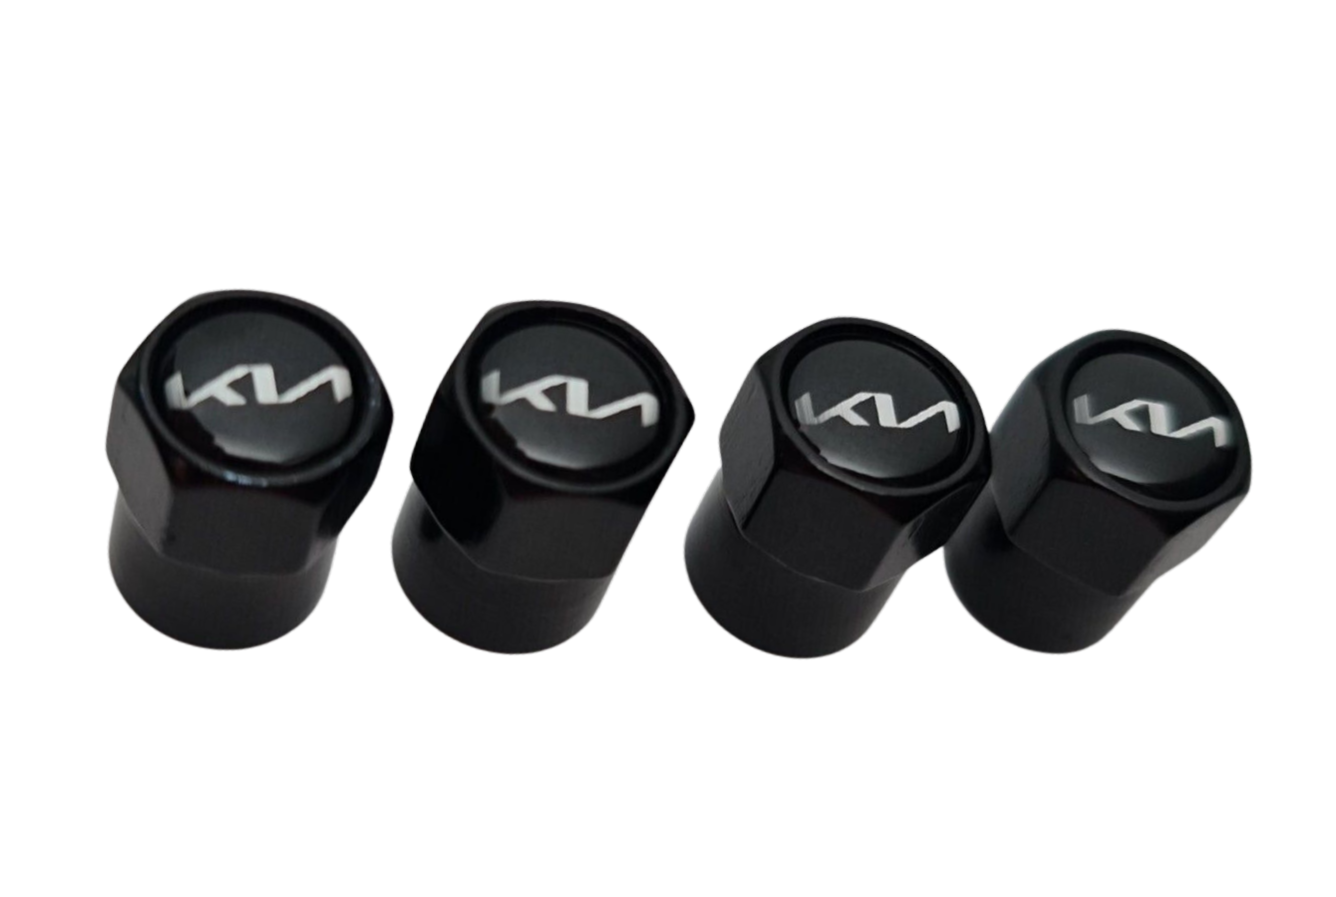 Kia (New Logo) Valve Caps - Black